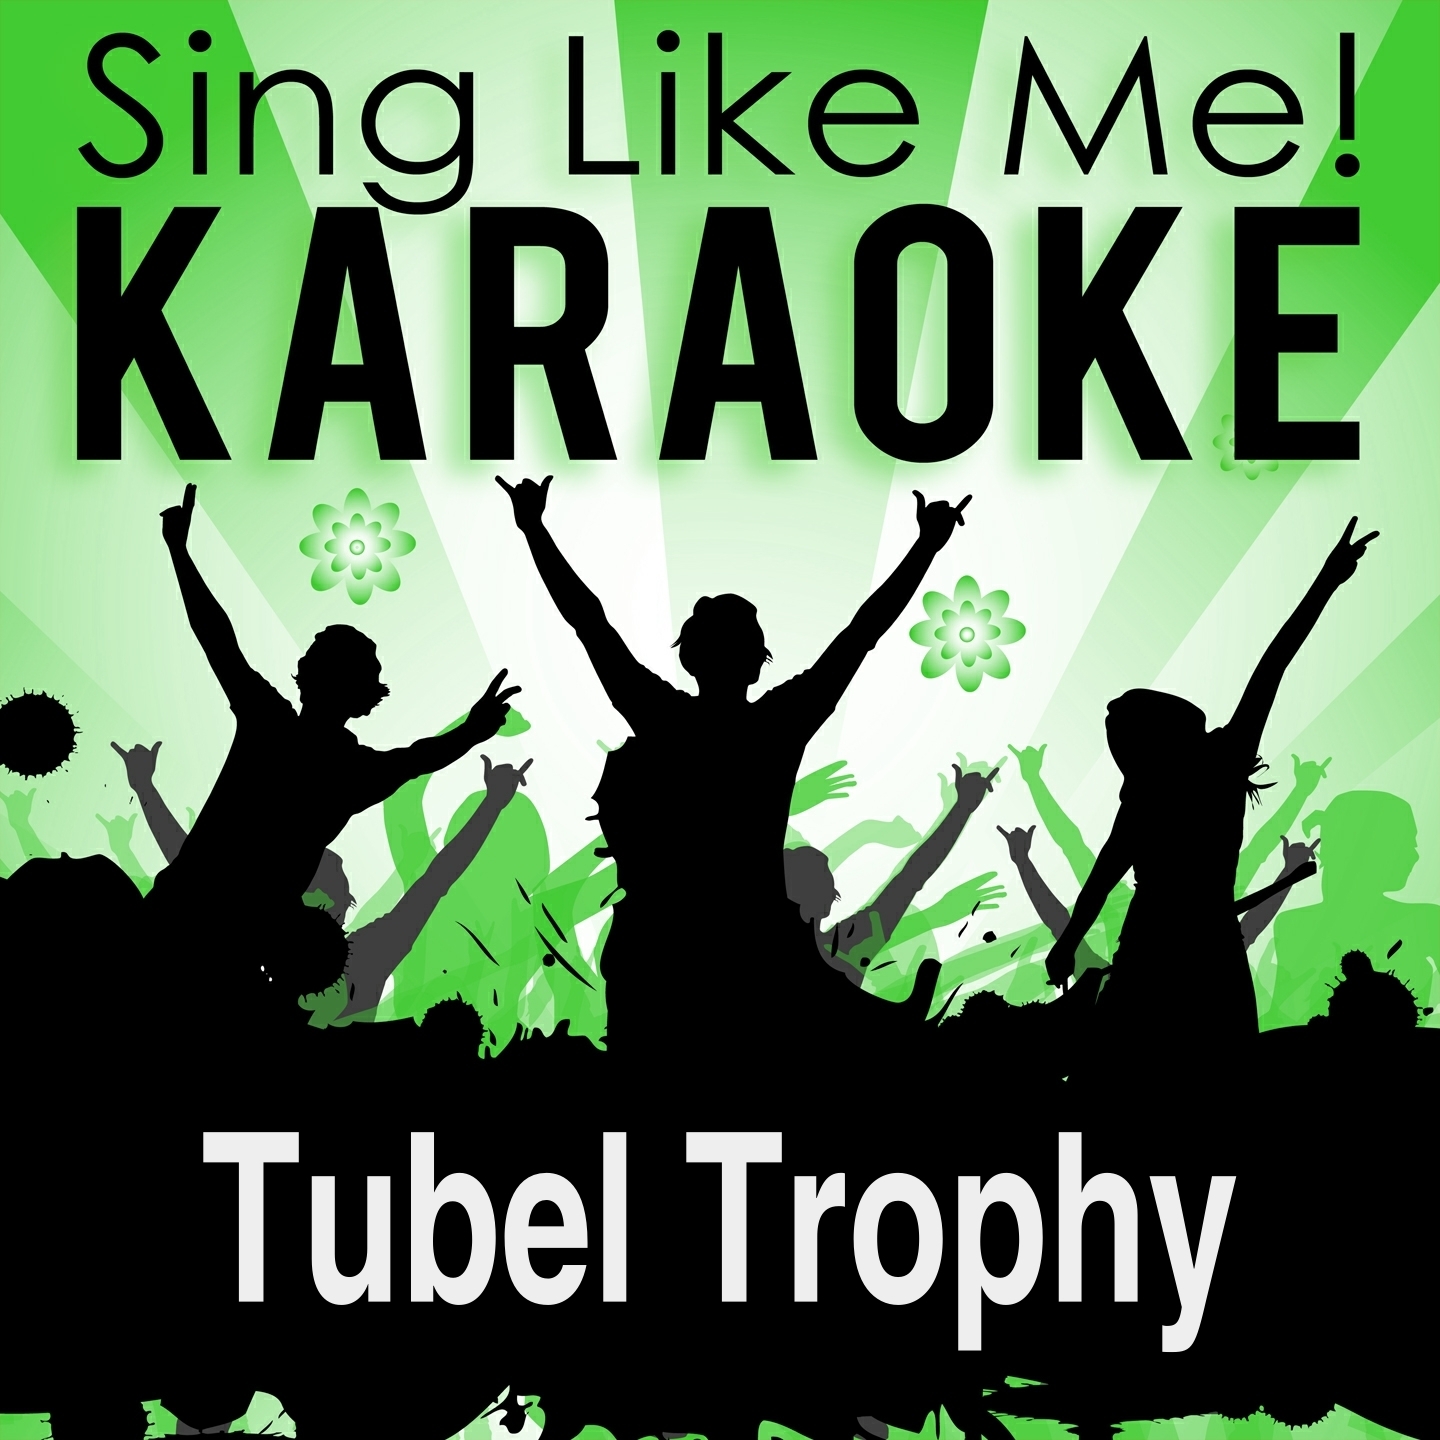 Tubel Trophy (Karaoke Version)